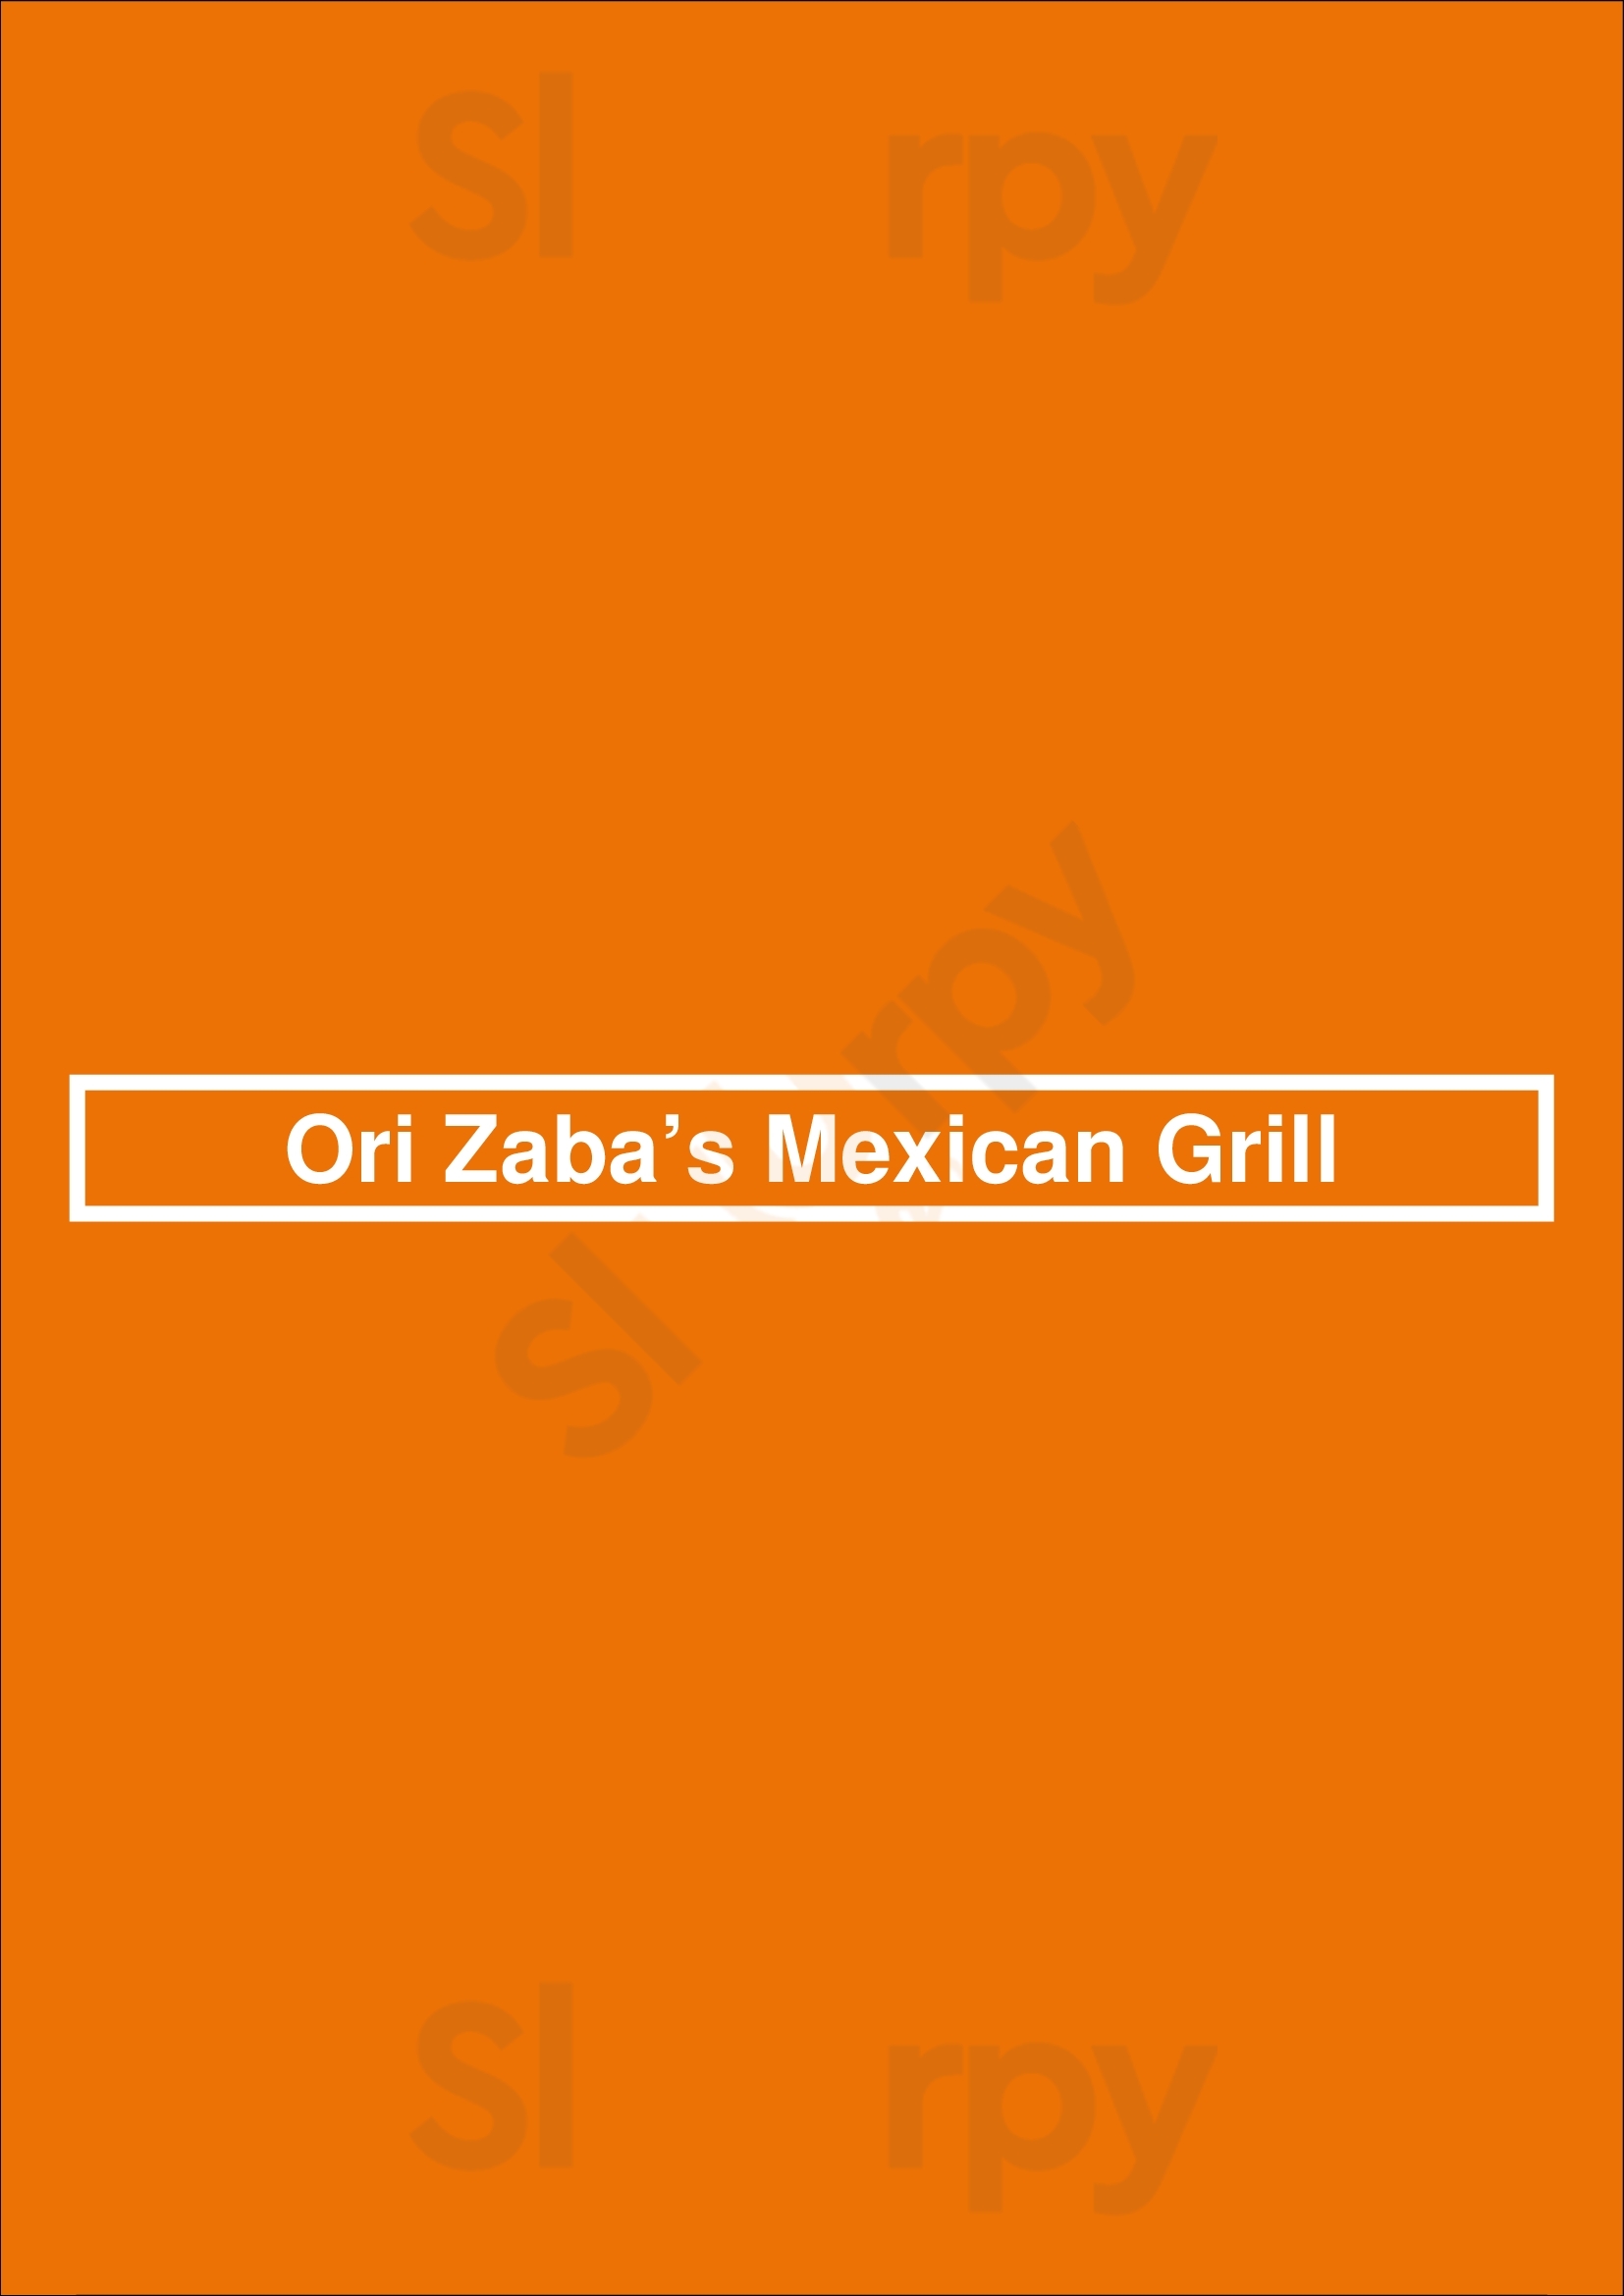 Ori Zaba’s Mexican Grill Las Vegas Menu - 1